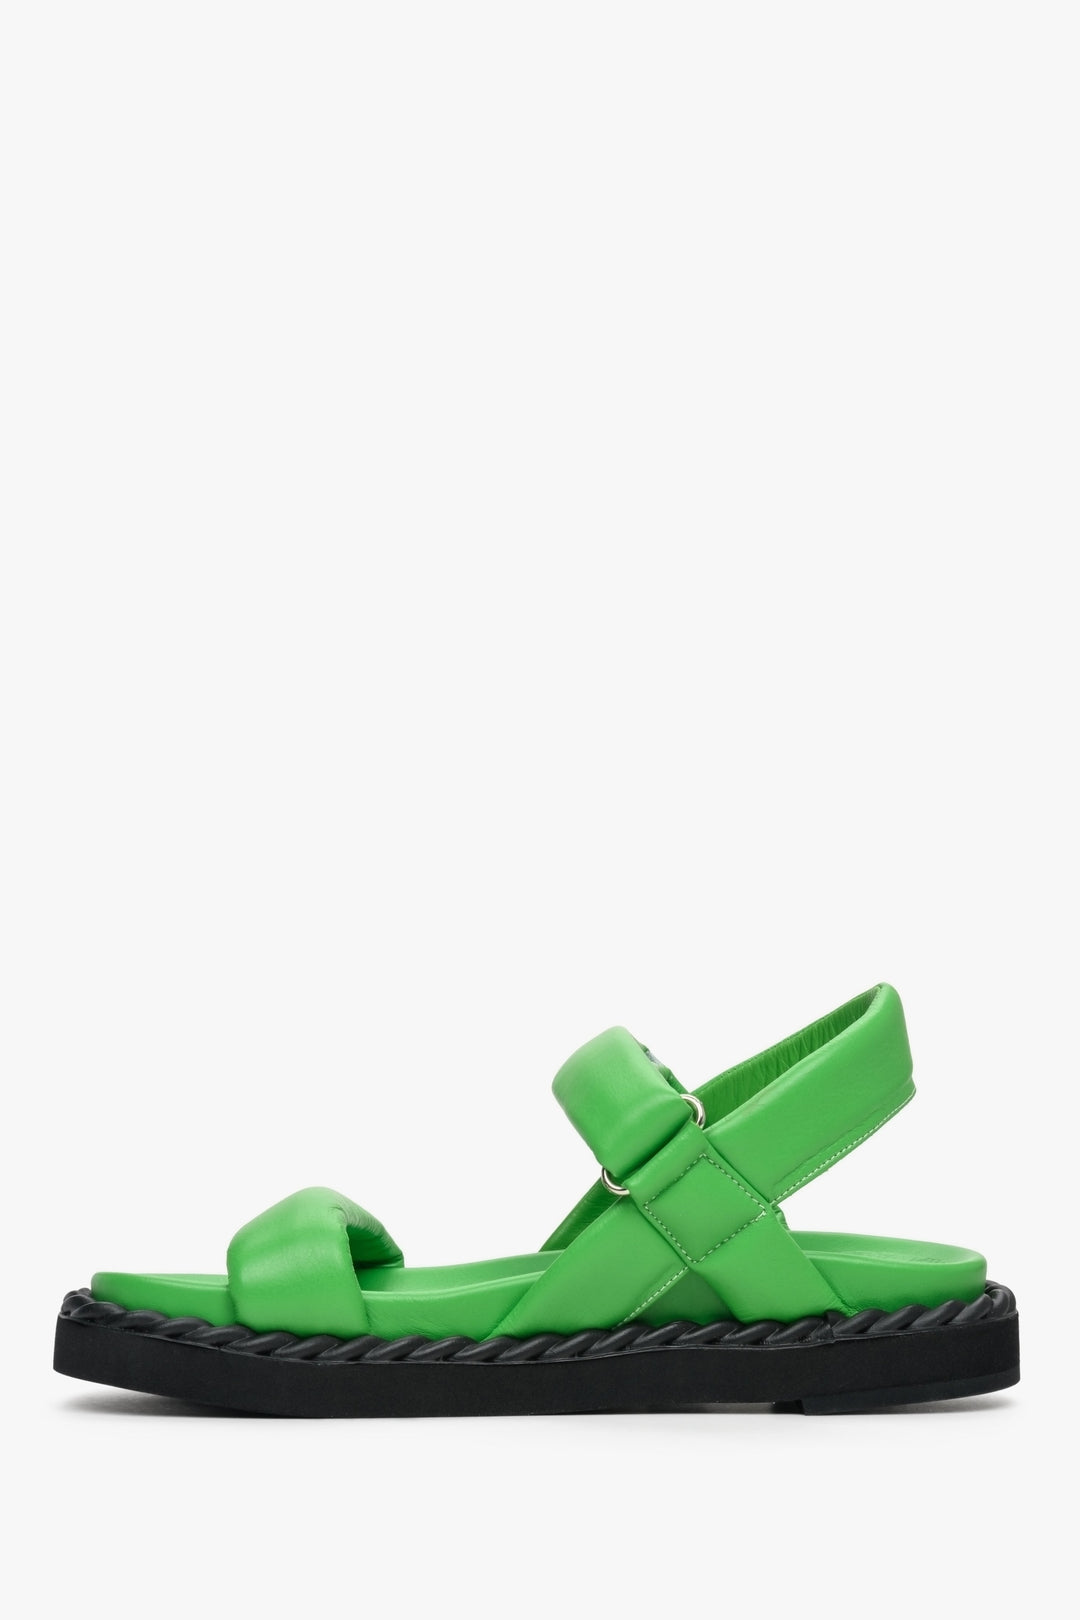 Estro women's green leather sandals for summer - shoe side.